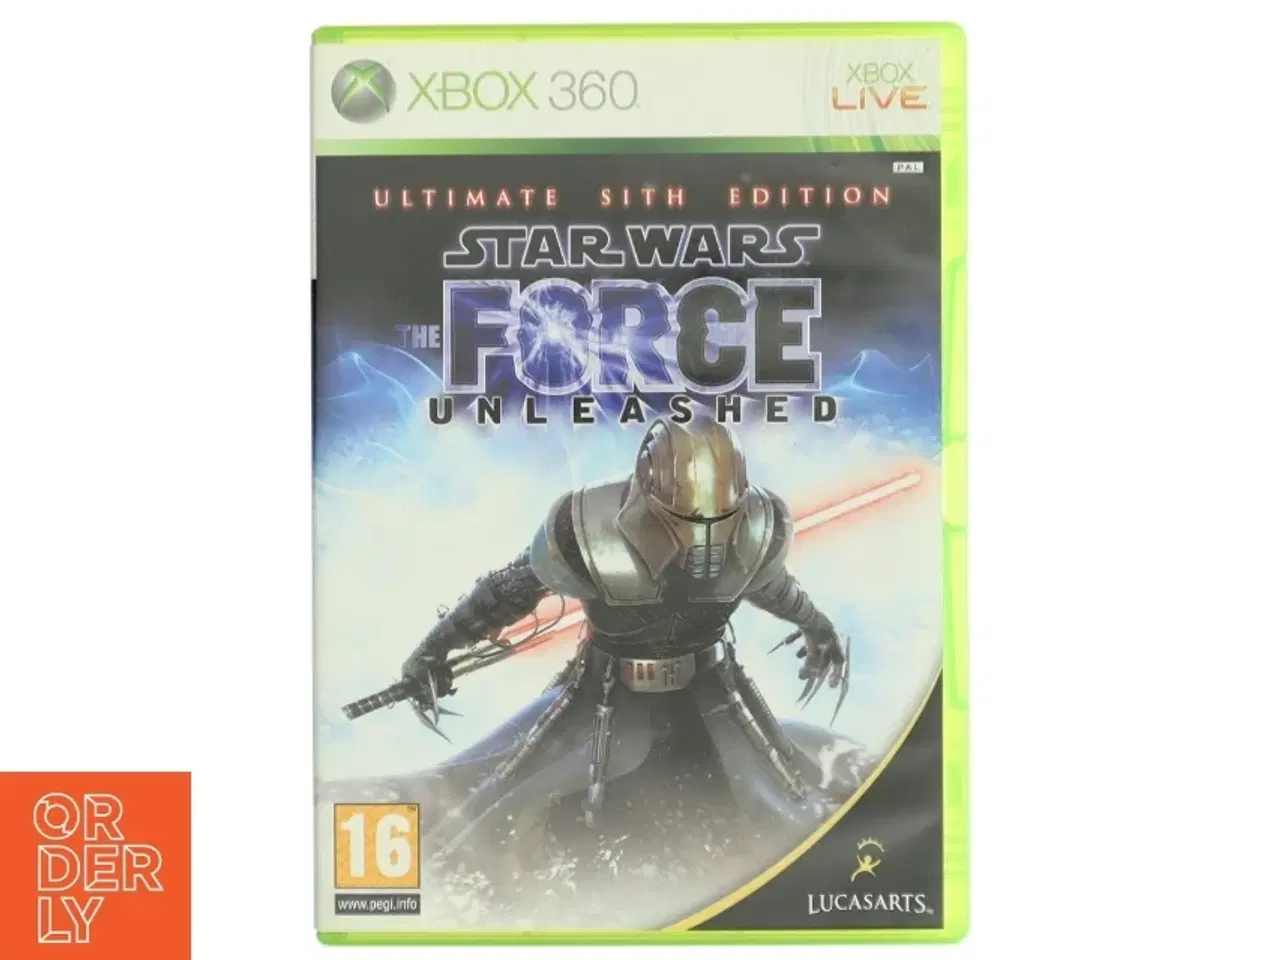 Billede 1 - Star Wars: The Force Unleashed Ultimate Sith Edition til Xbox 360 fra Microsoft